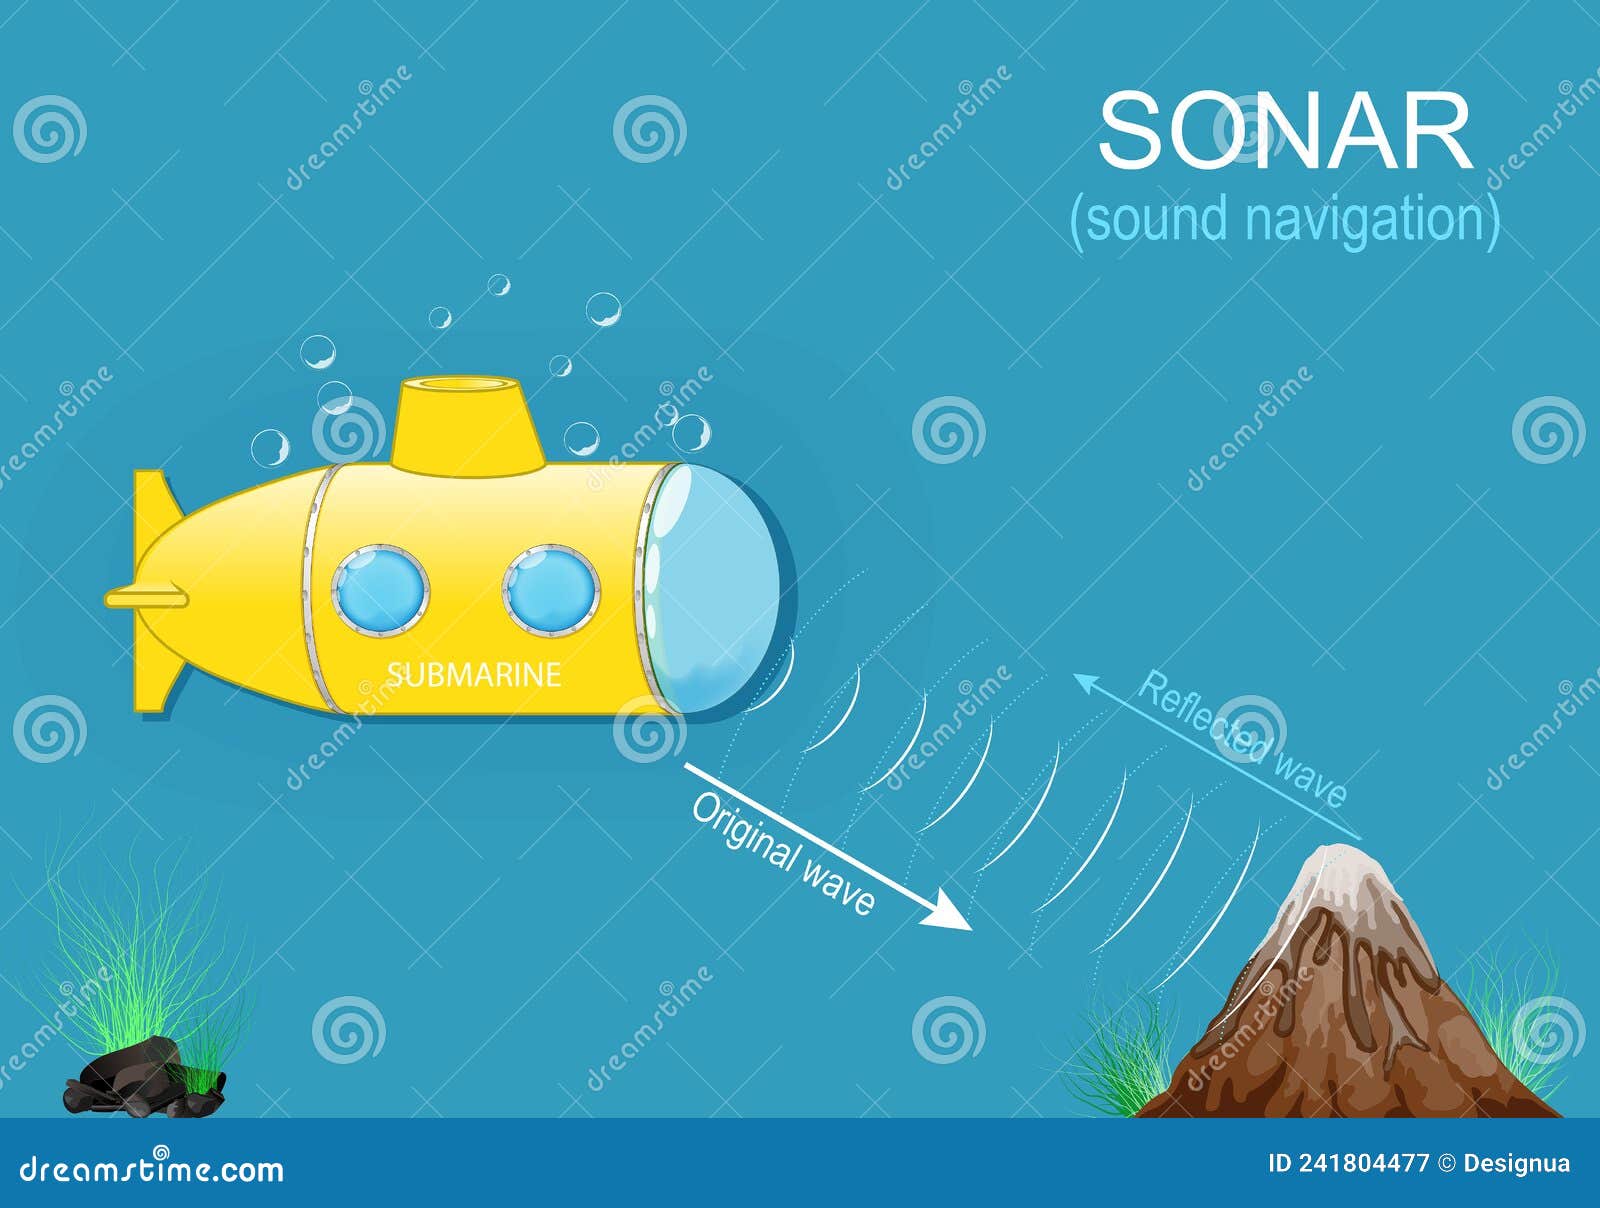 sonar and submarine navigation. sound navigation waves